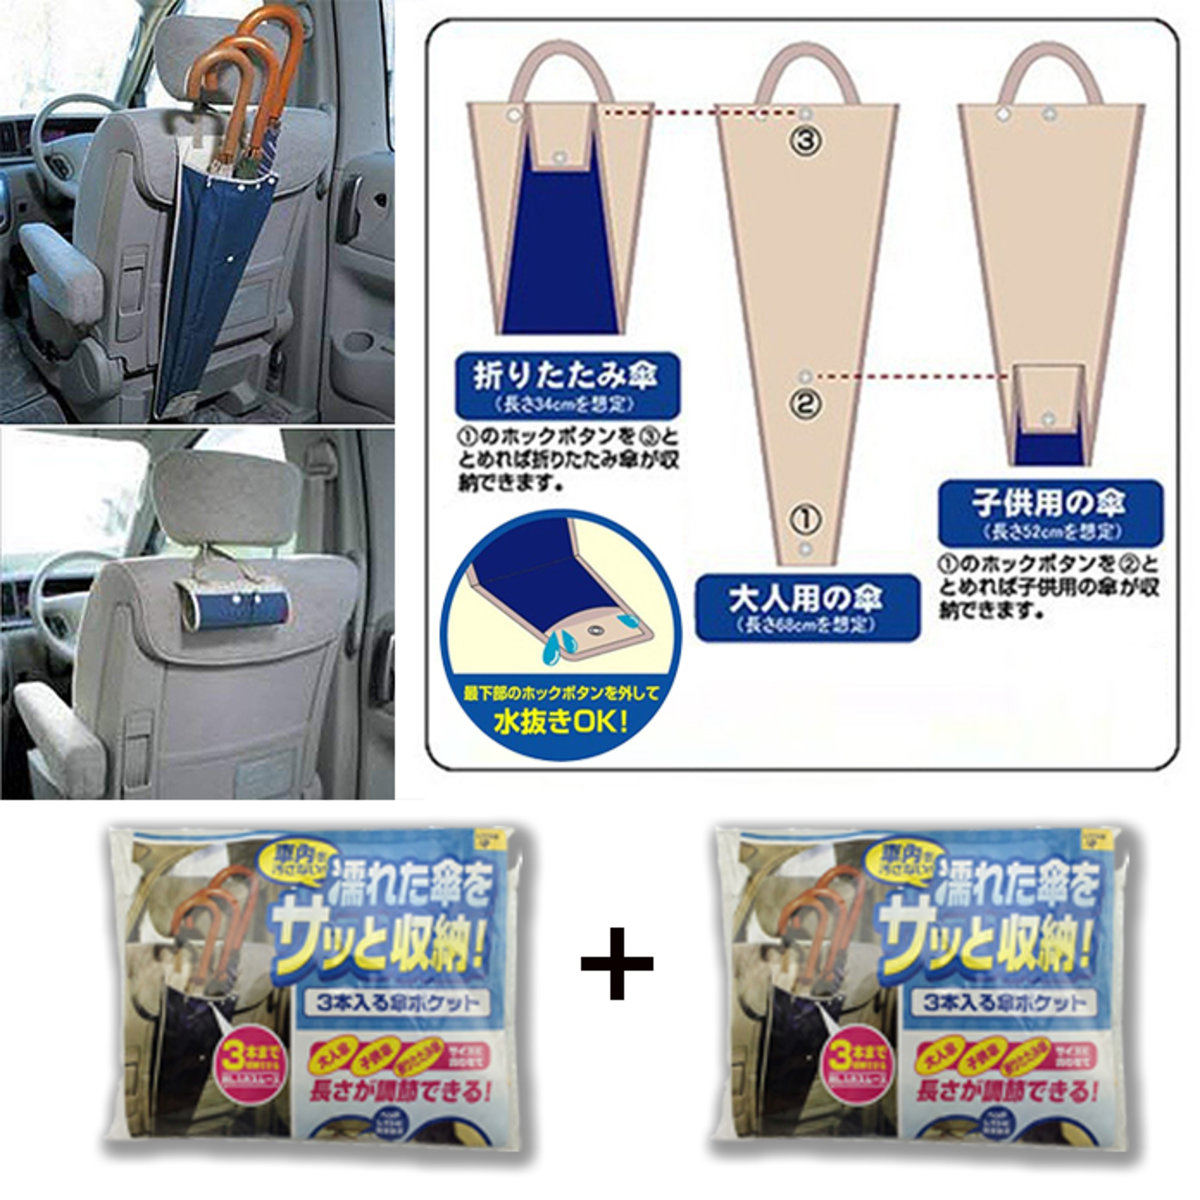 2 sets Japan style Hanging Waterproof Umbrella Storage Holder